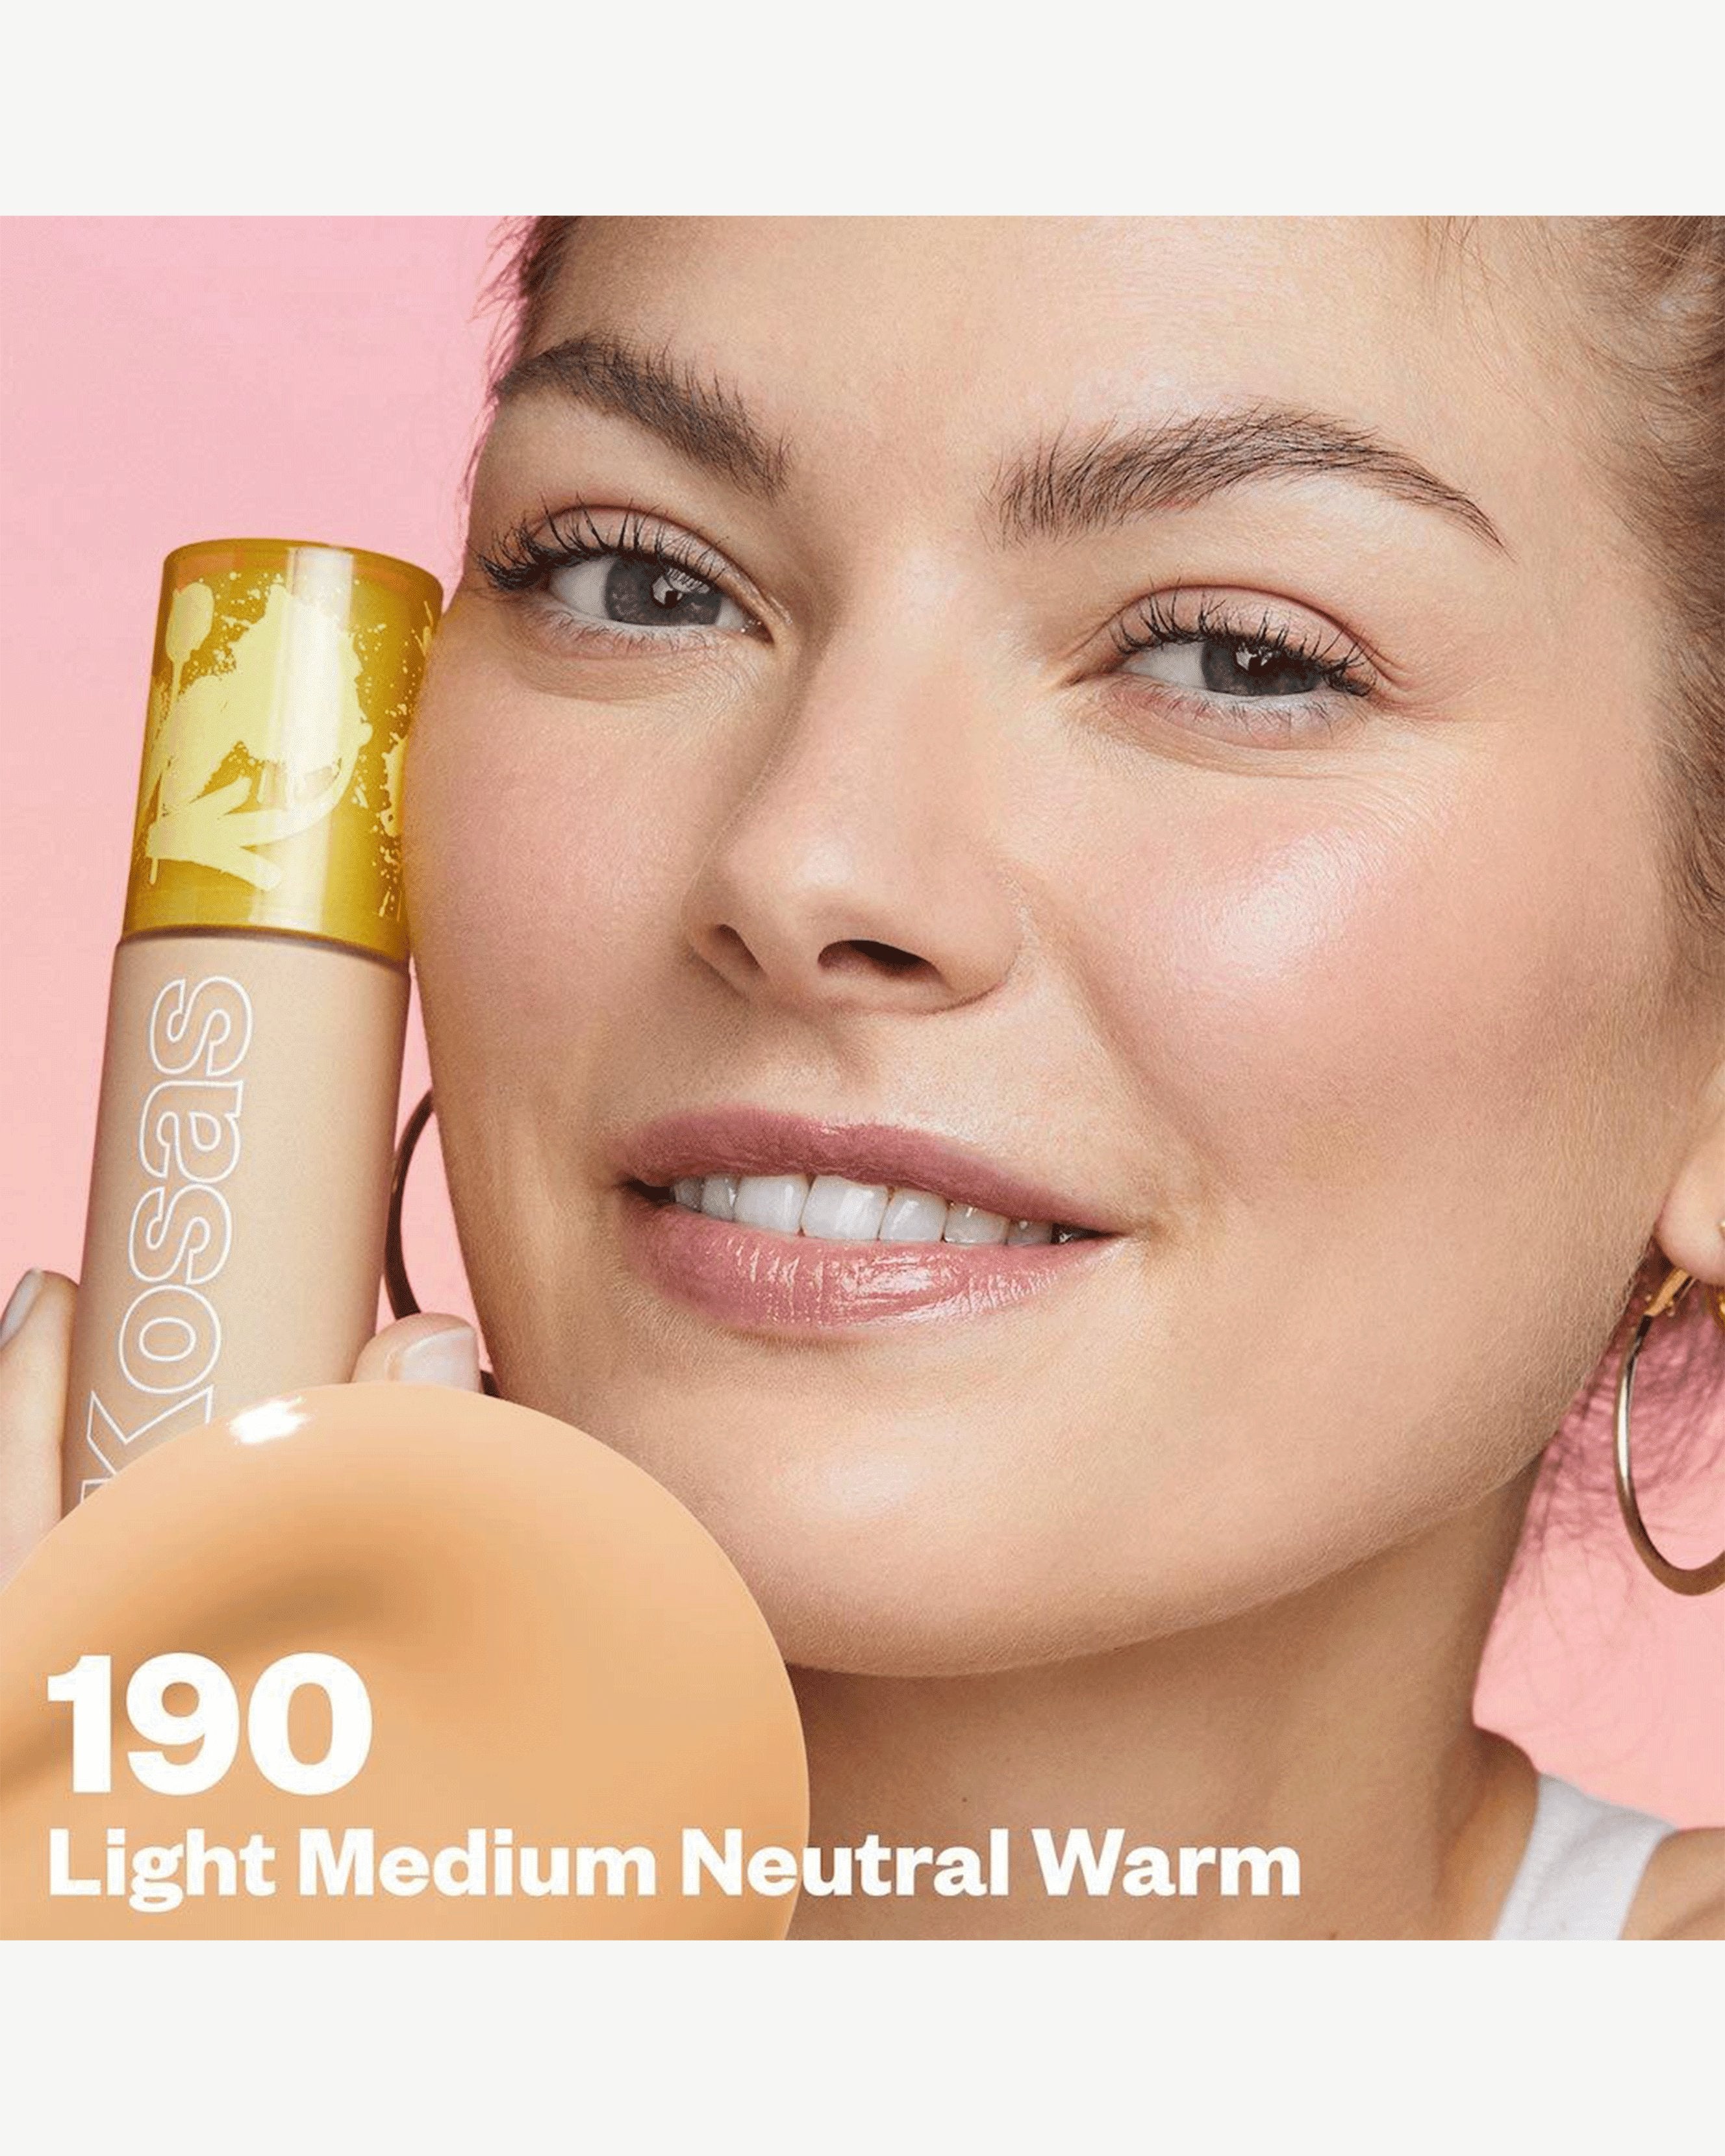 Light Medium Neutral Warm 190 (light medium with neutral yellow undertones)